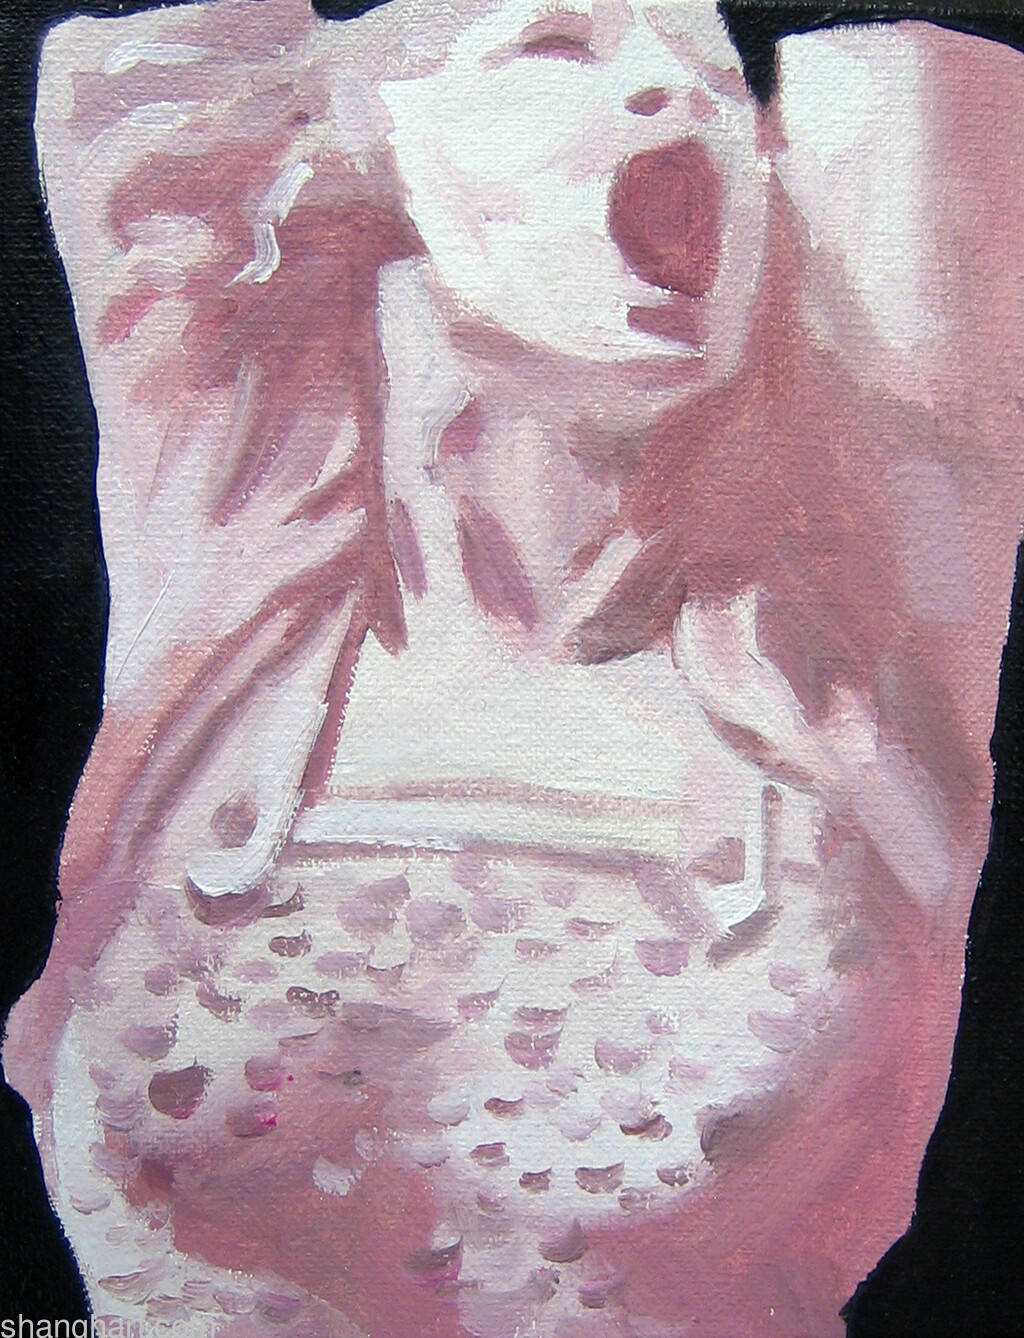 2009, 20x16cm, oil on canvas